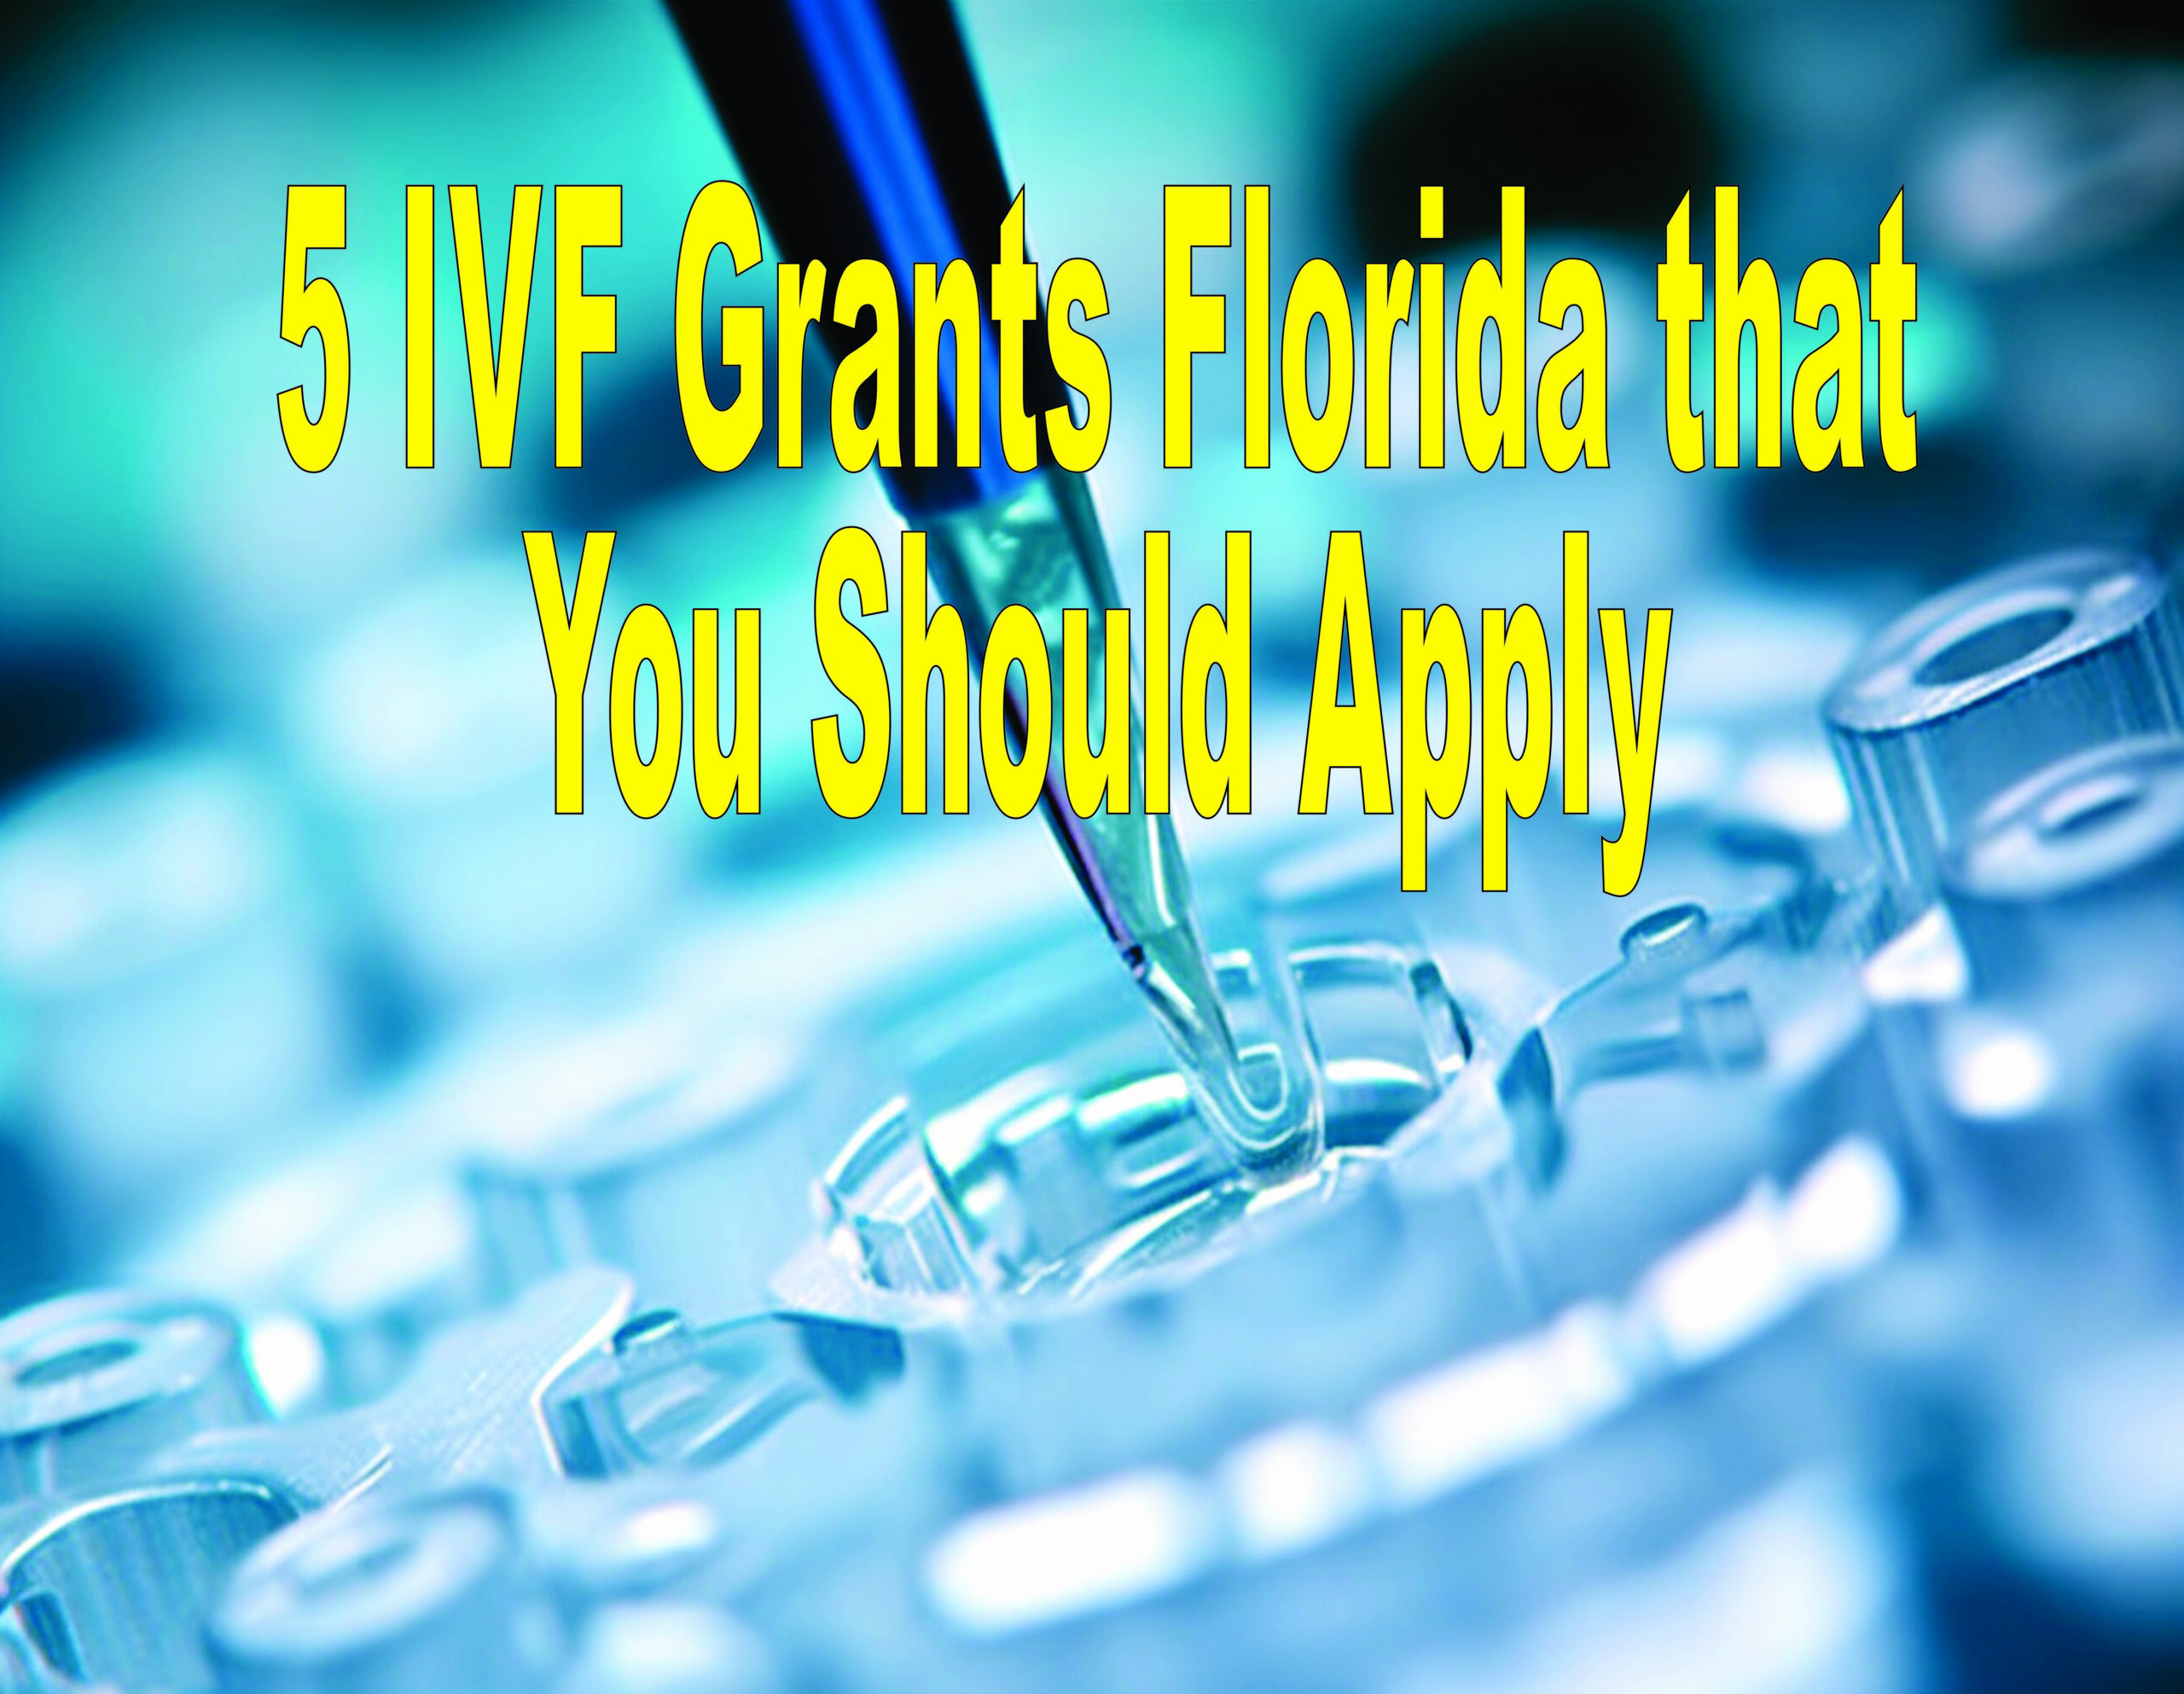 5 Ivf Grants Florida That You Should Apply